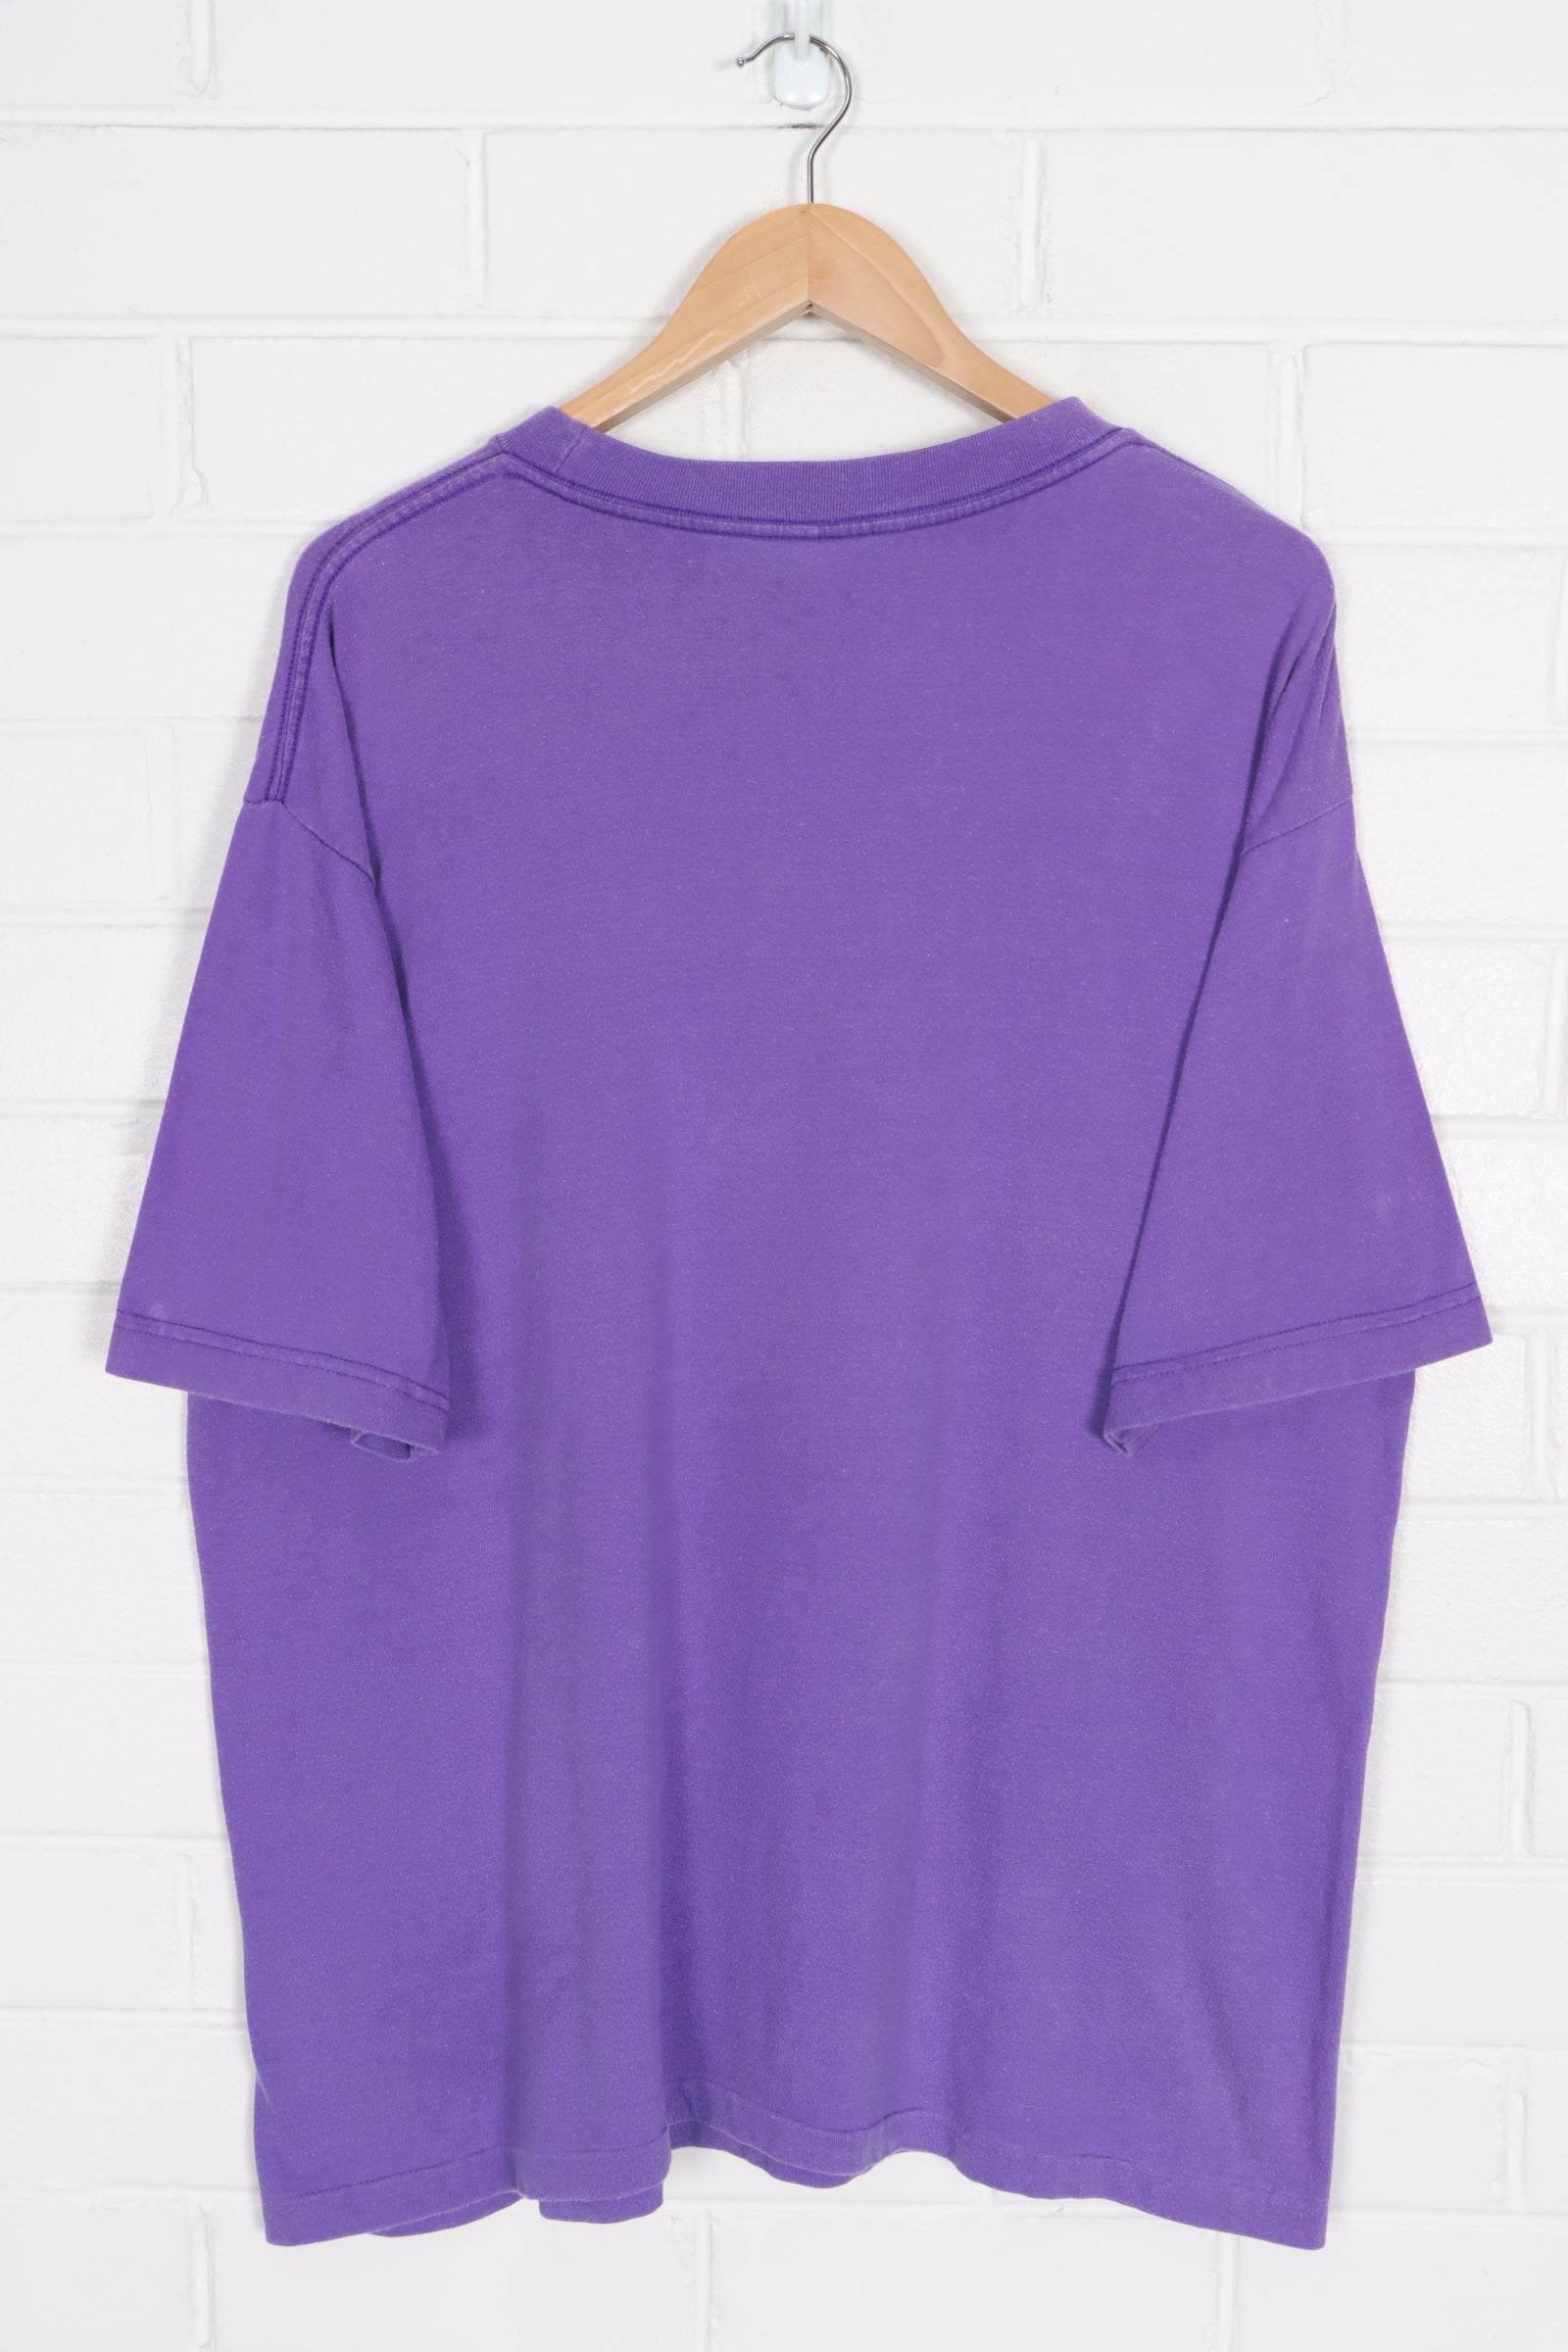 Vintage Sun Sportswear 1978 Garfield T Shirt Size XL Purple Wishin